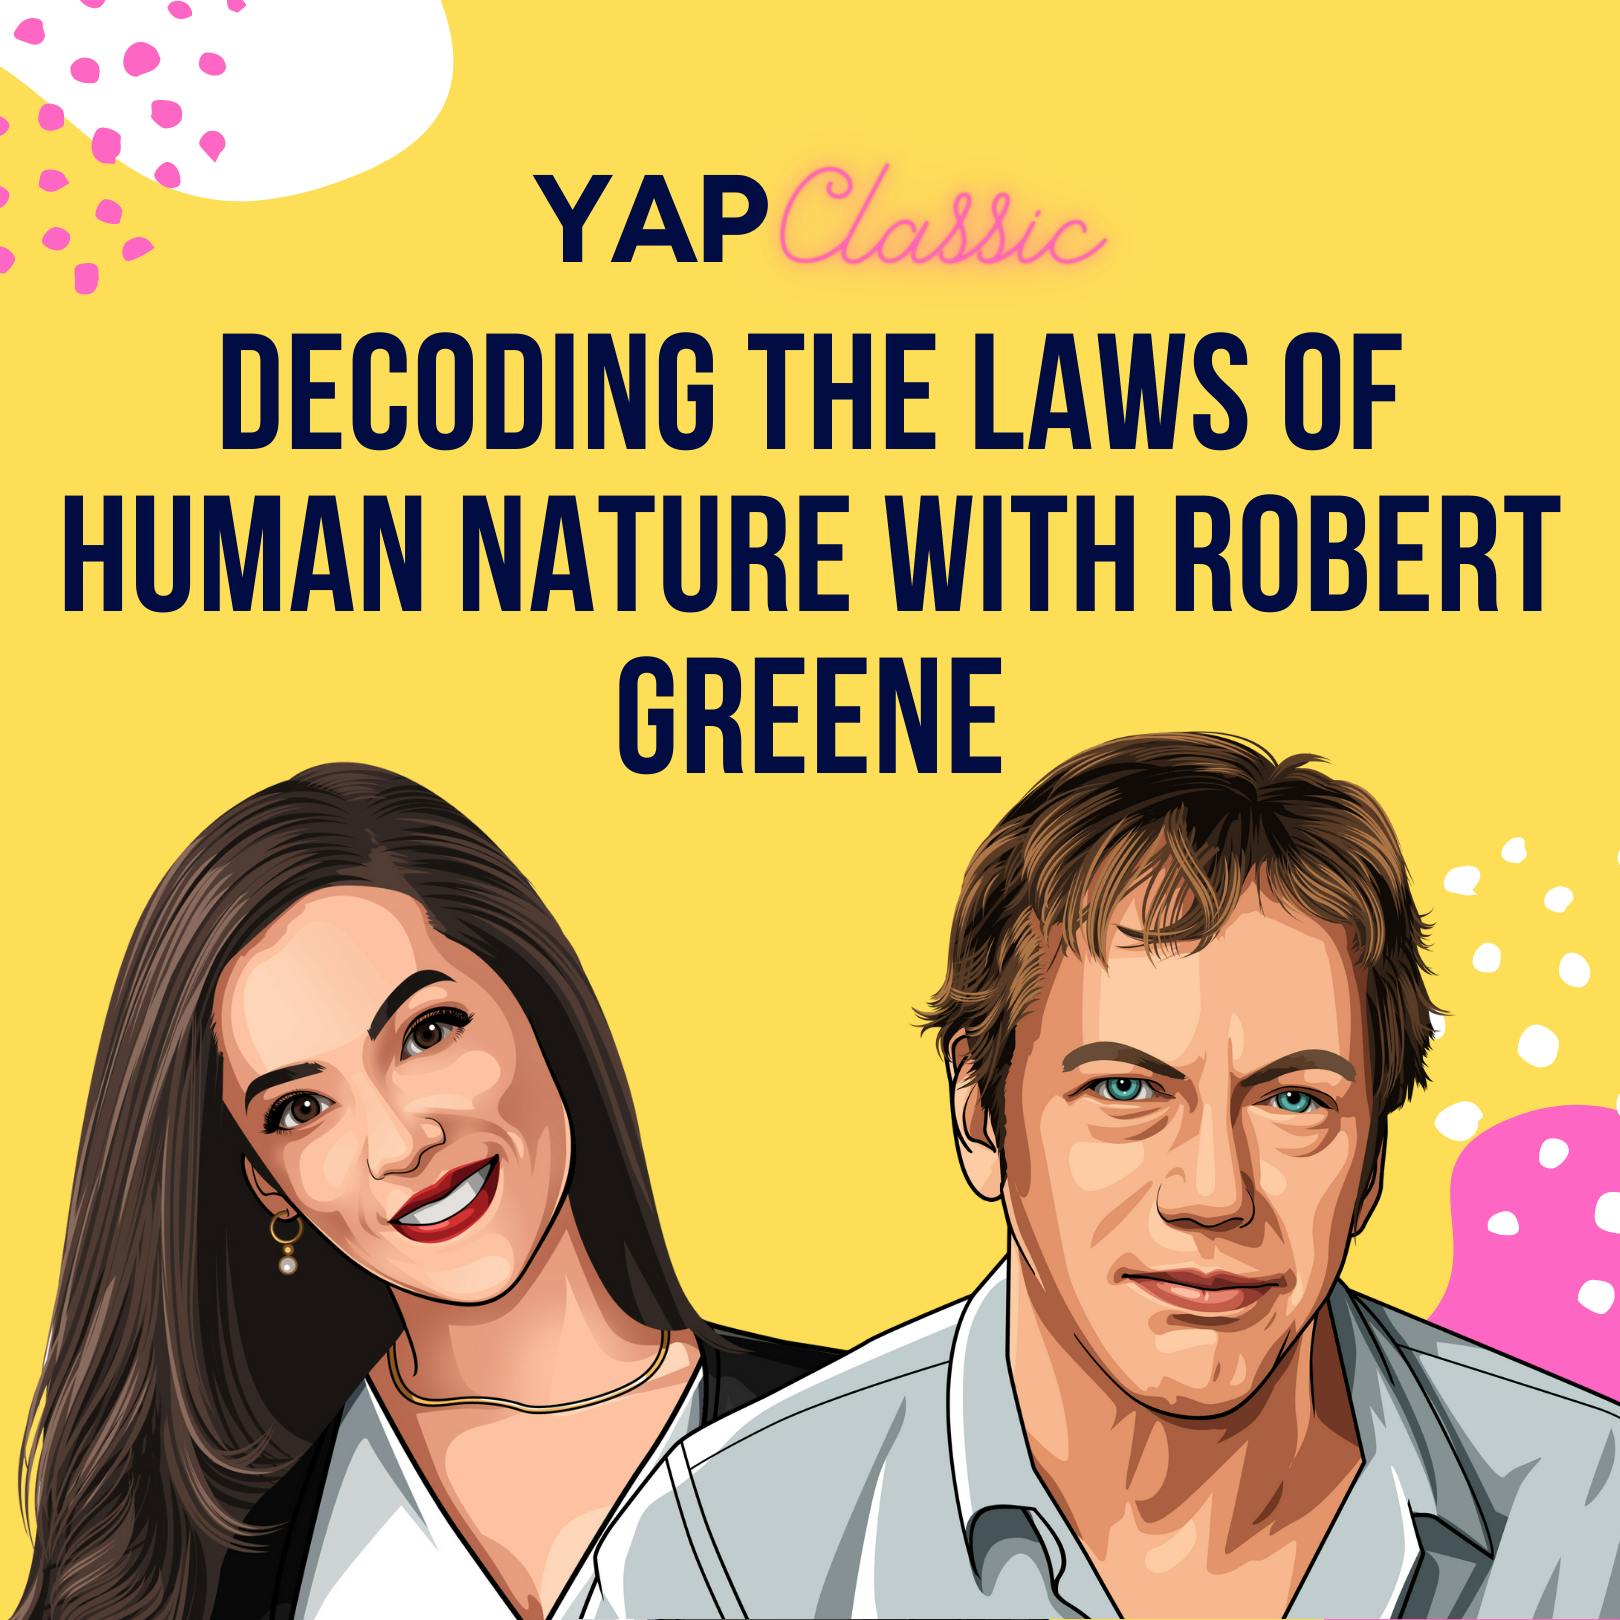 YAPClassic: Robert Greene on Decoding the Laws of Human Nature